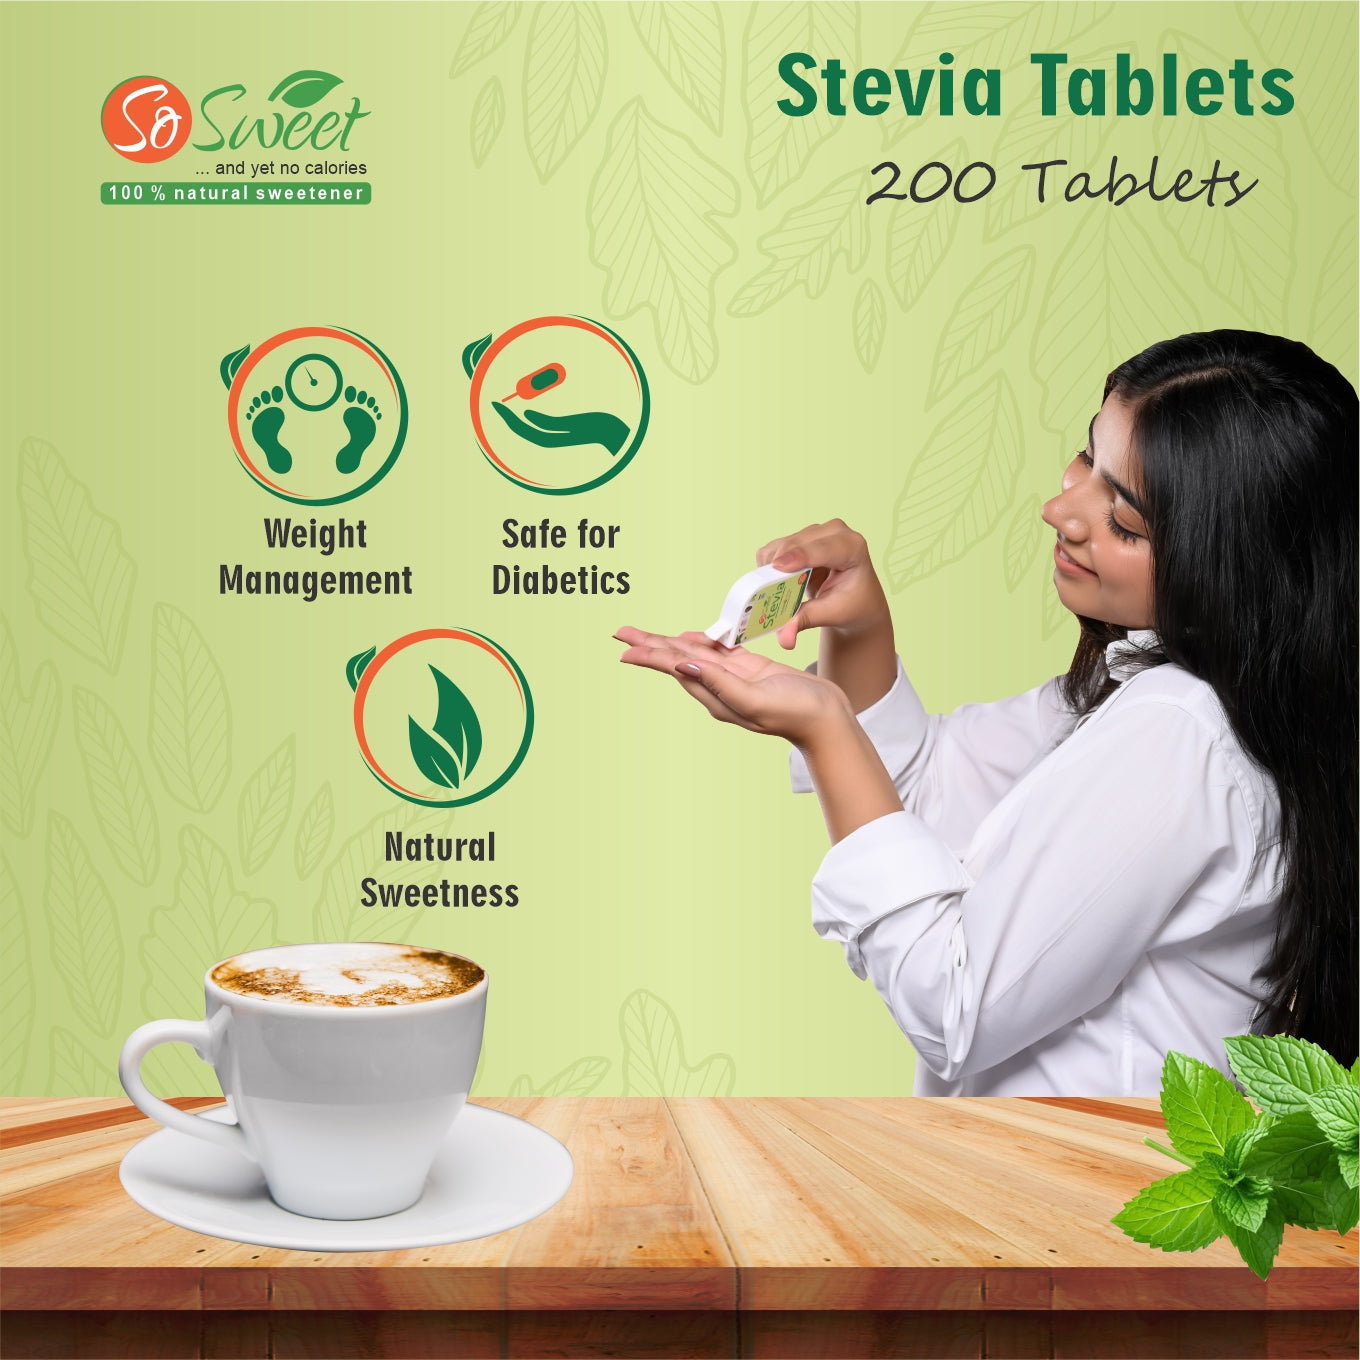 So Sweet Stevia Tablet -200 Sugar Free Natural Zero Calorie Sweetener-Pack of 4